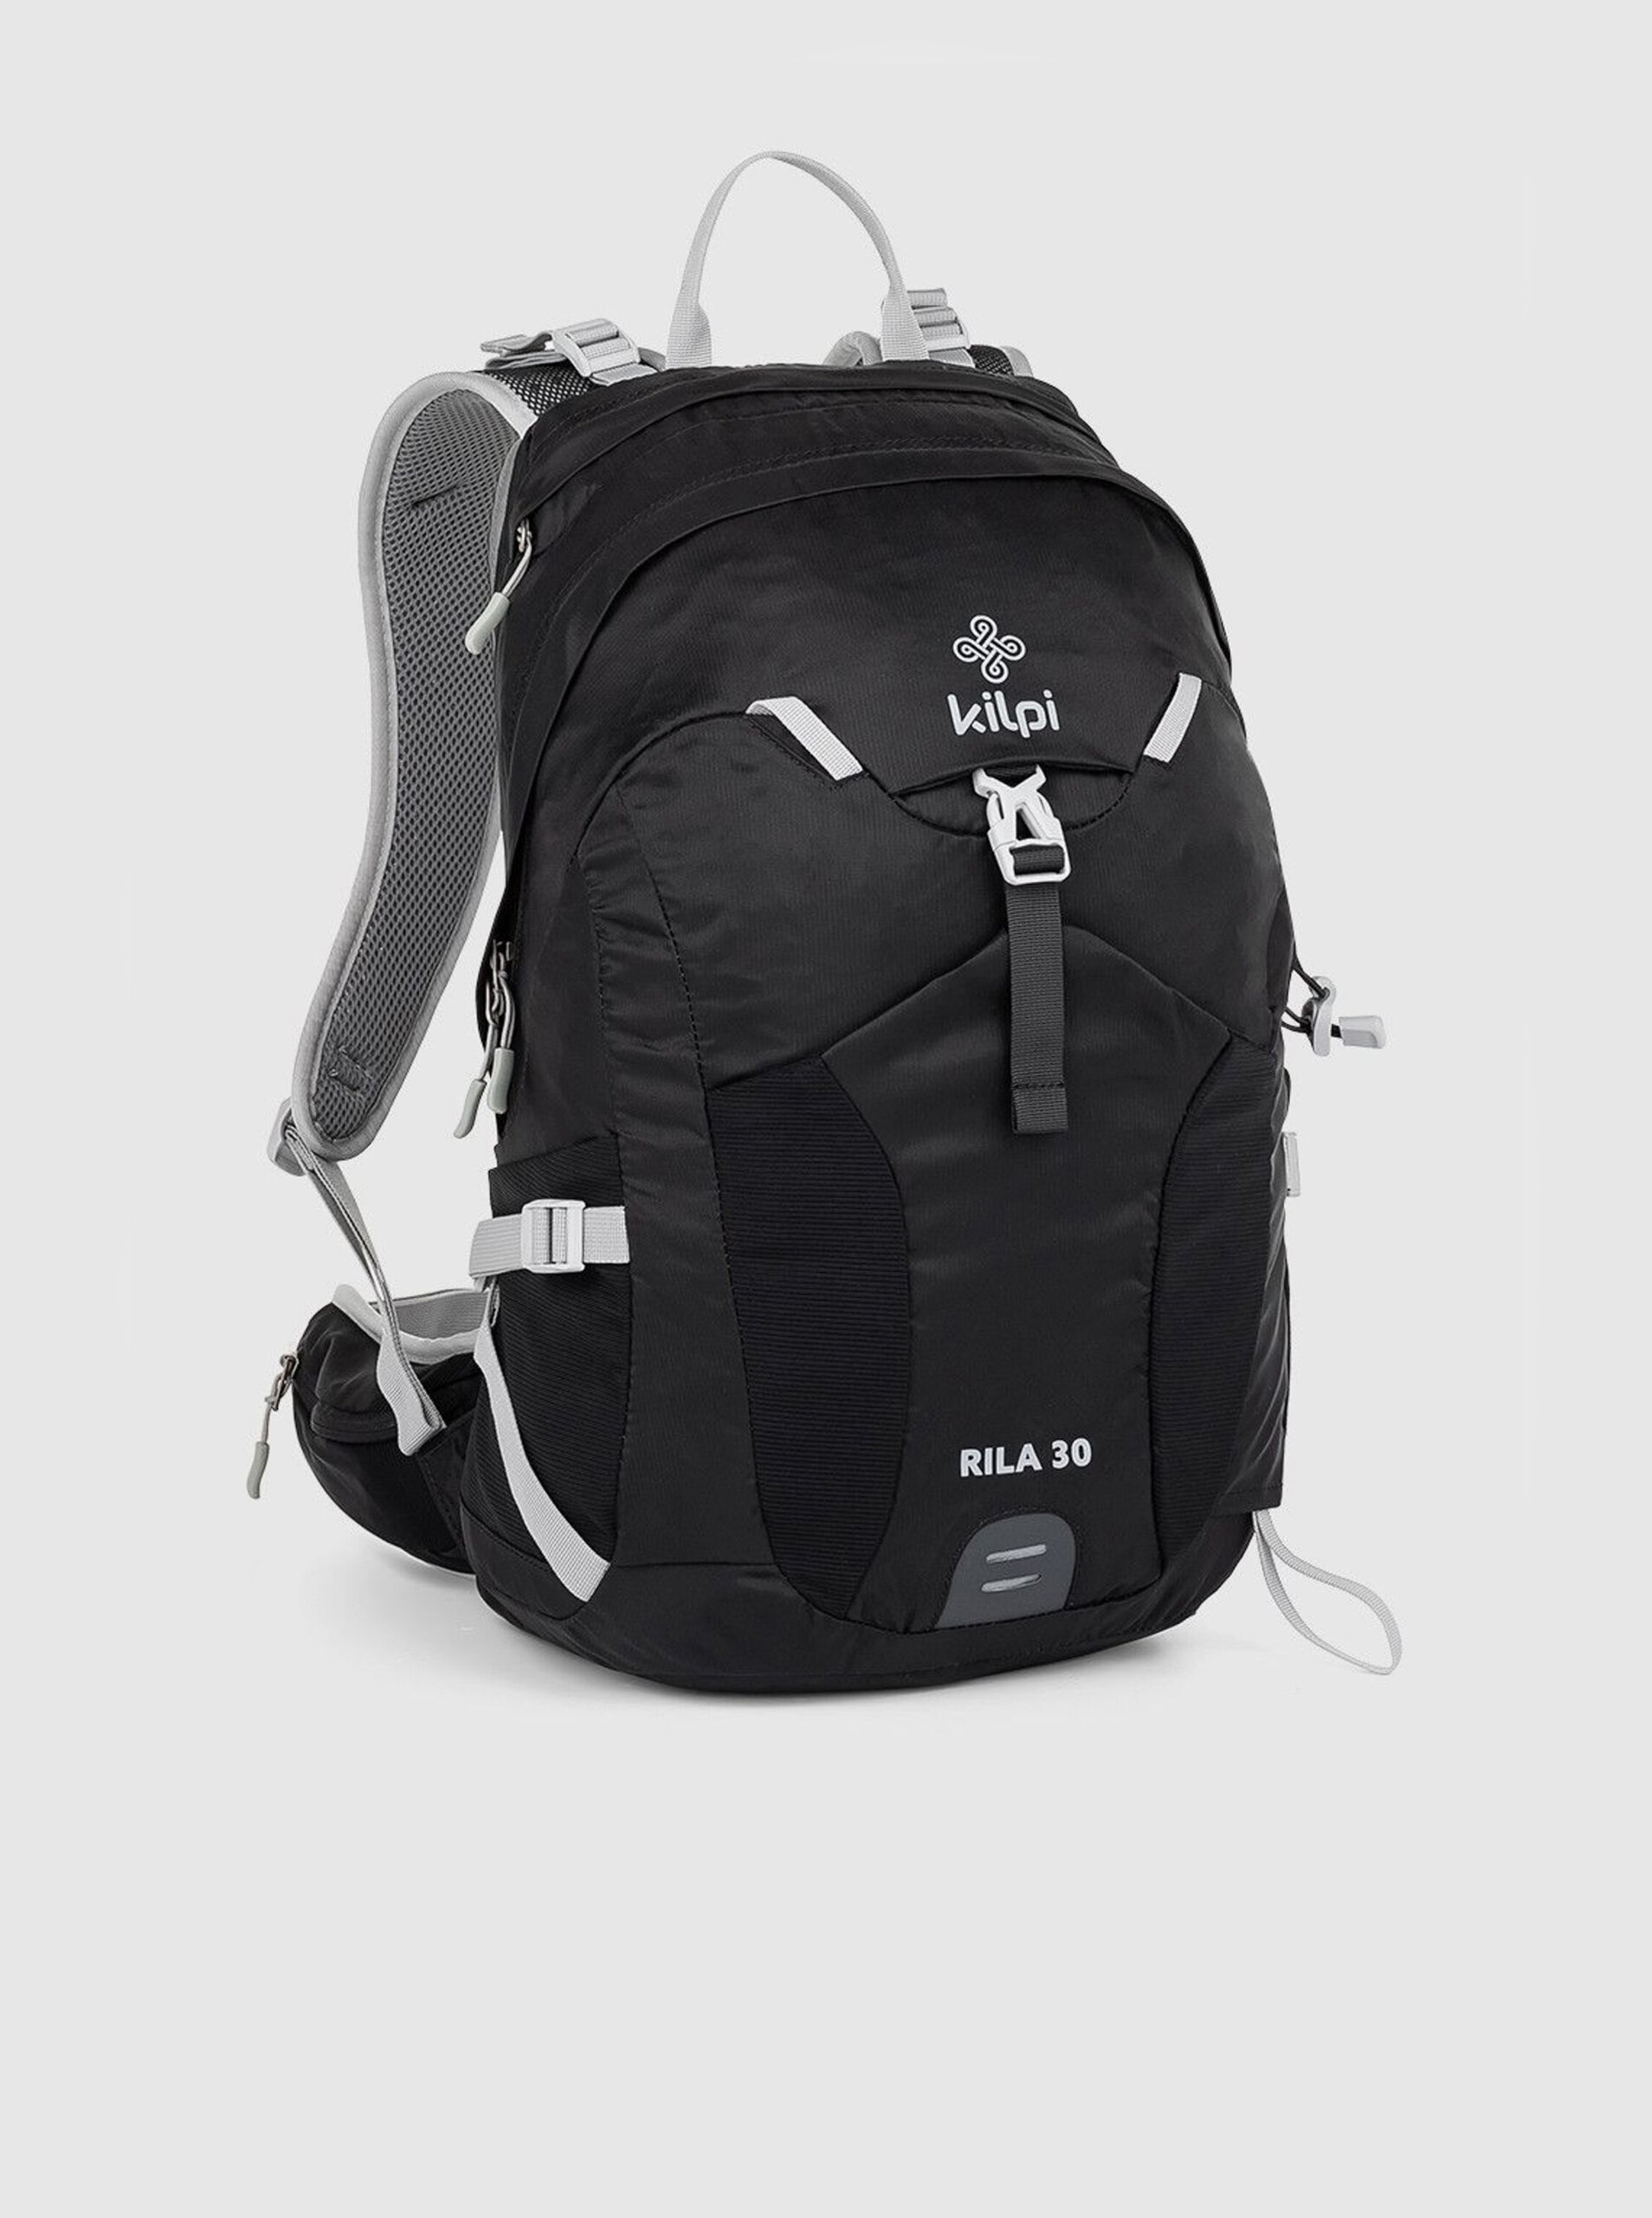 Lacno Čierny unisex športový ruksak Kilpi RILA (30 l)